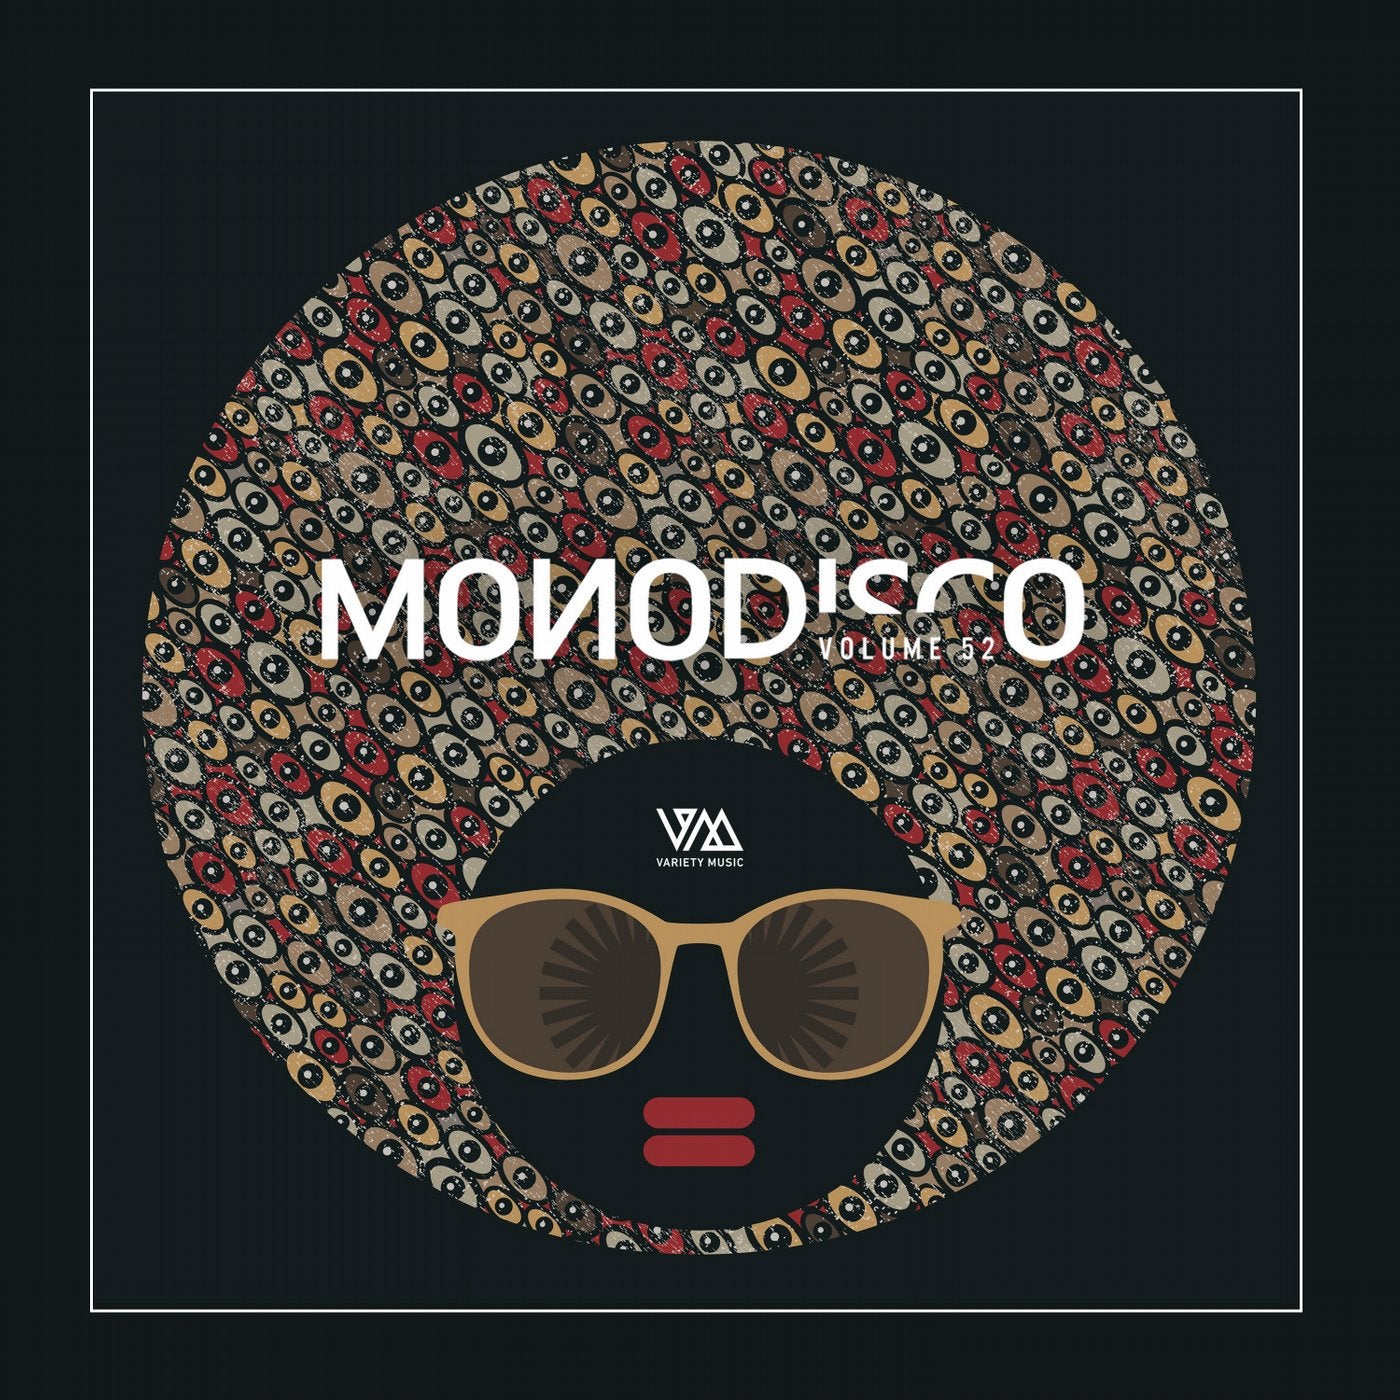 Monodisco Vol. 52